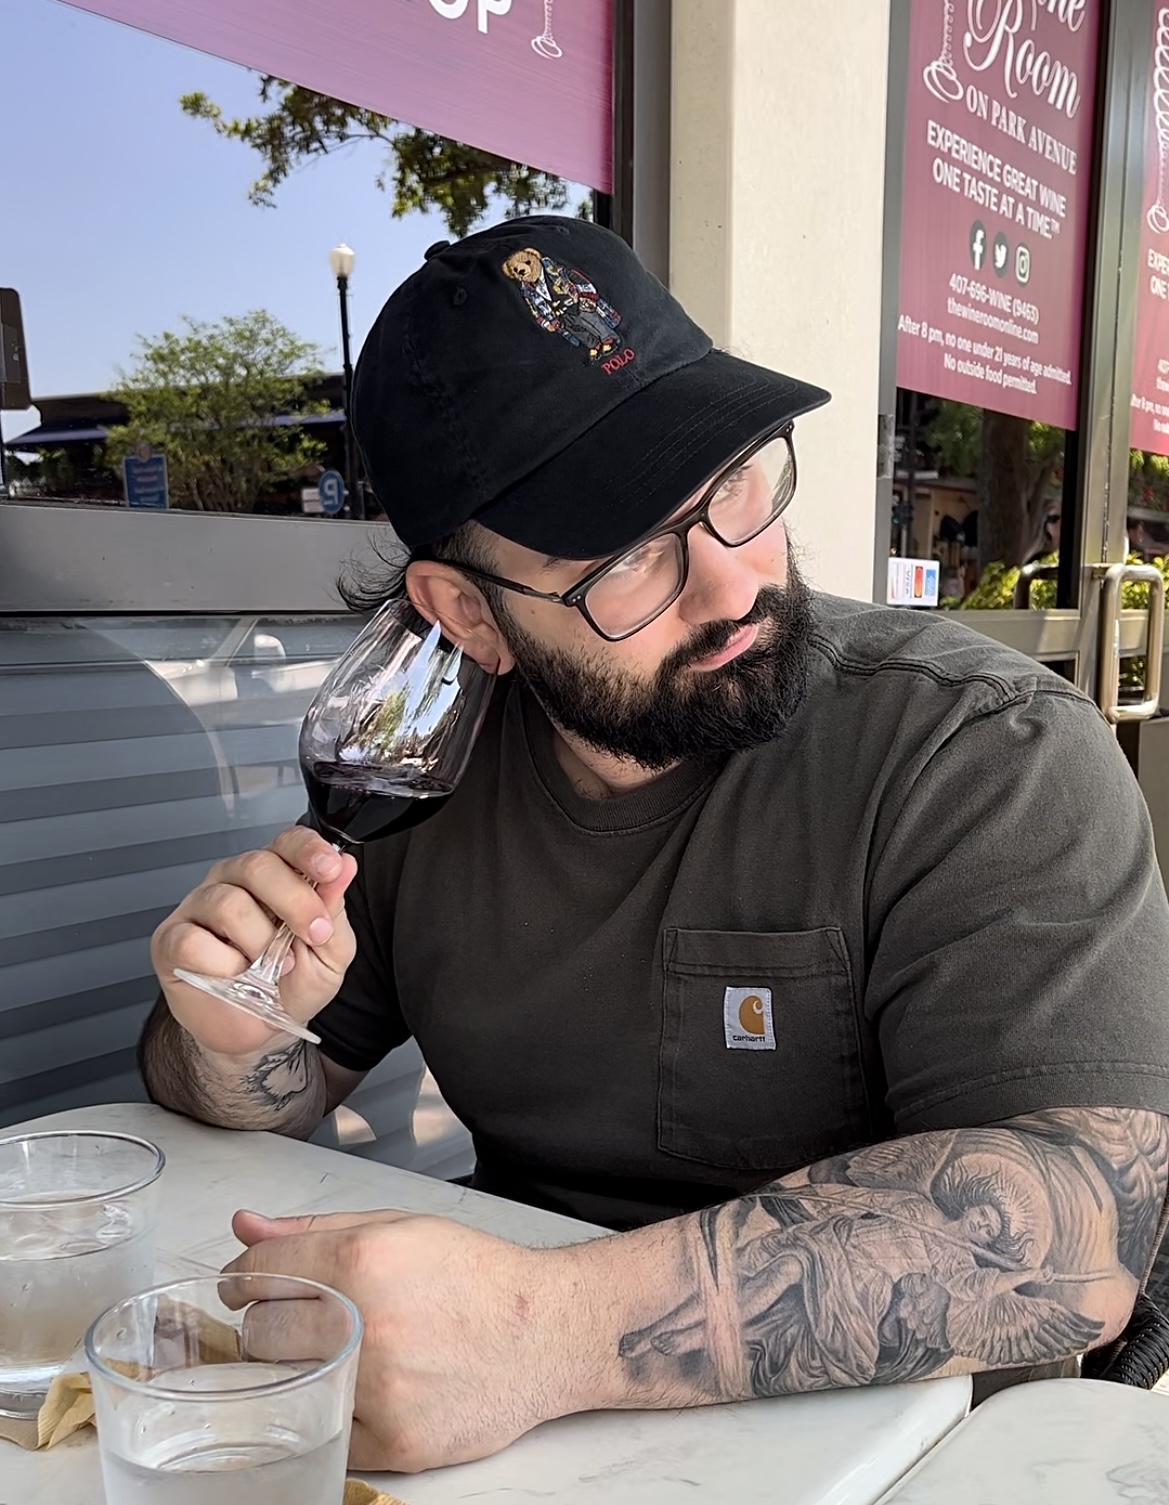 Mark drinking wine